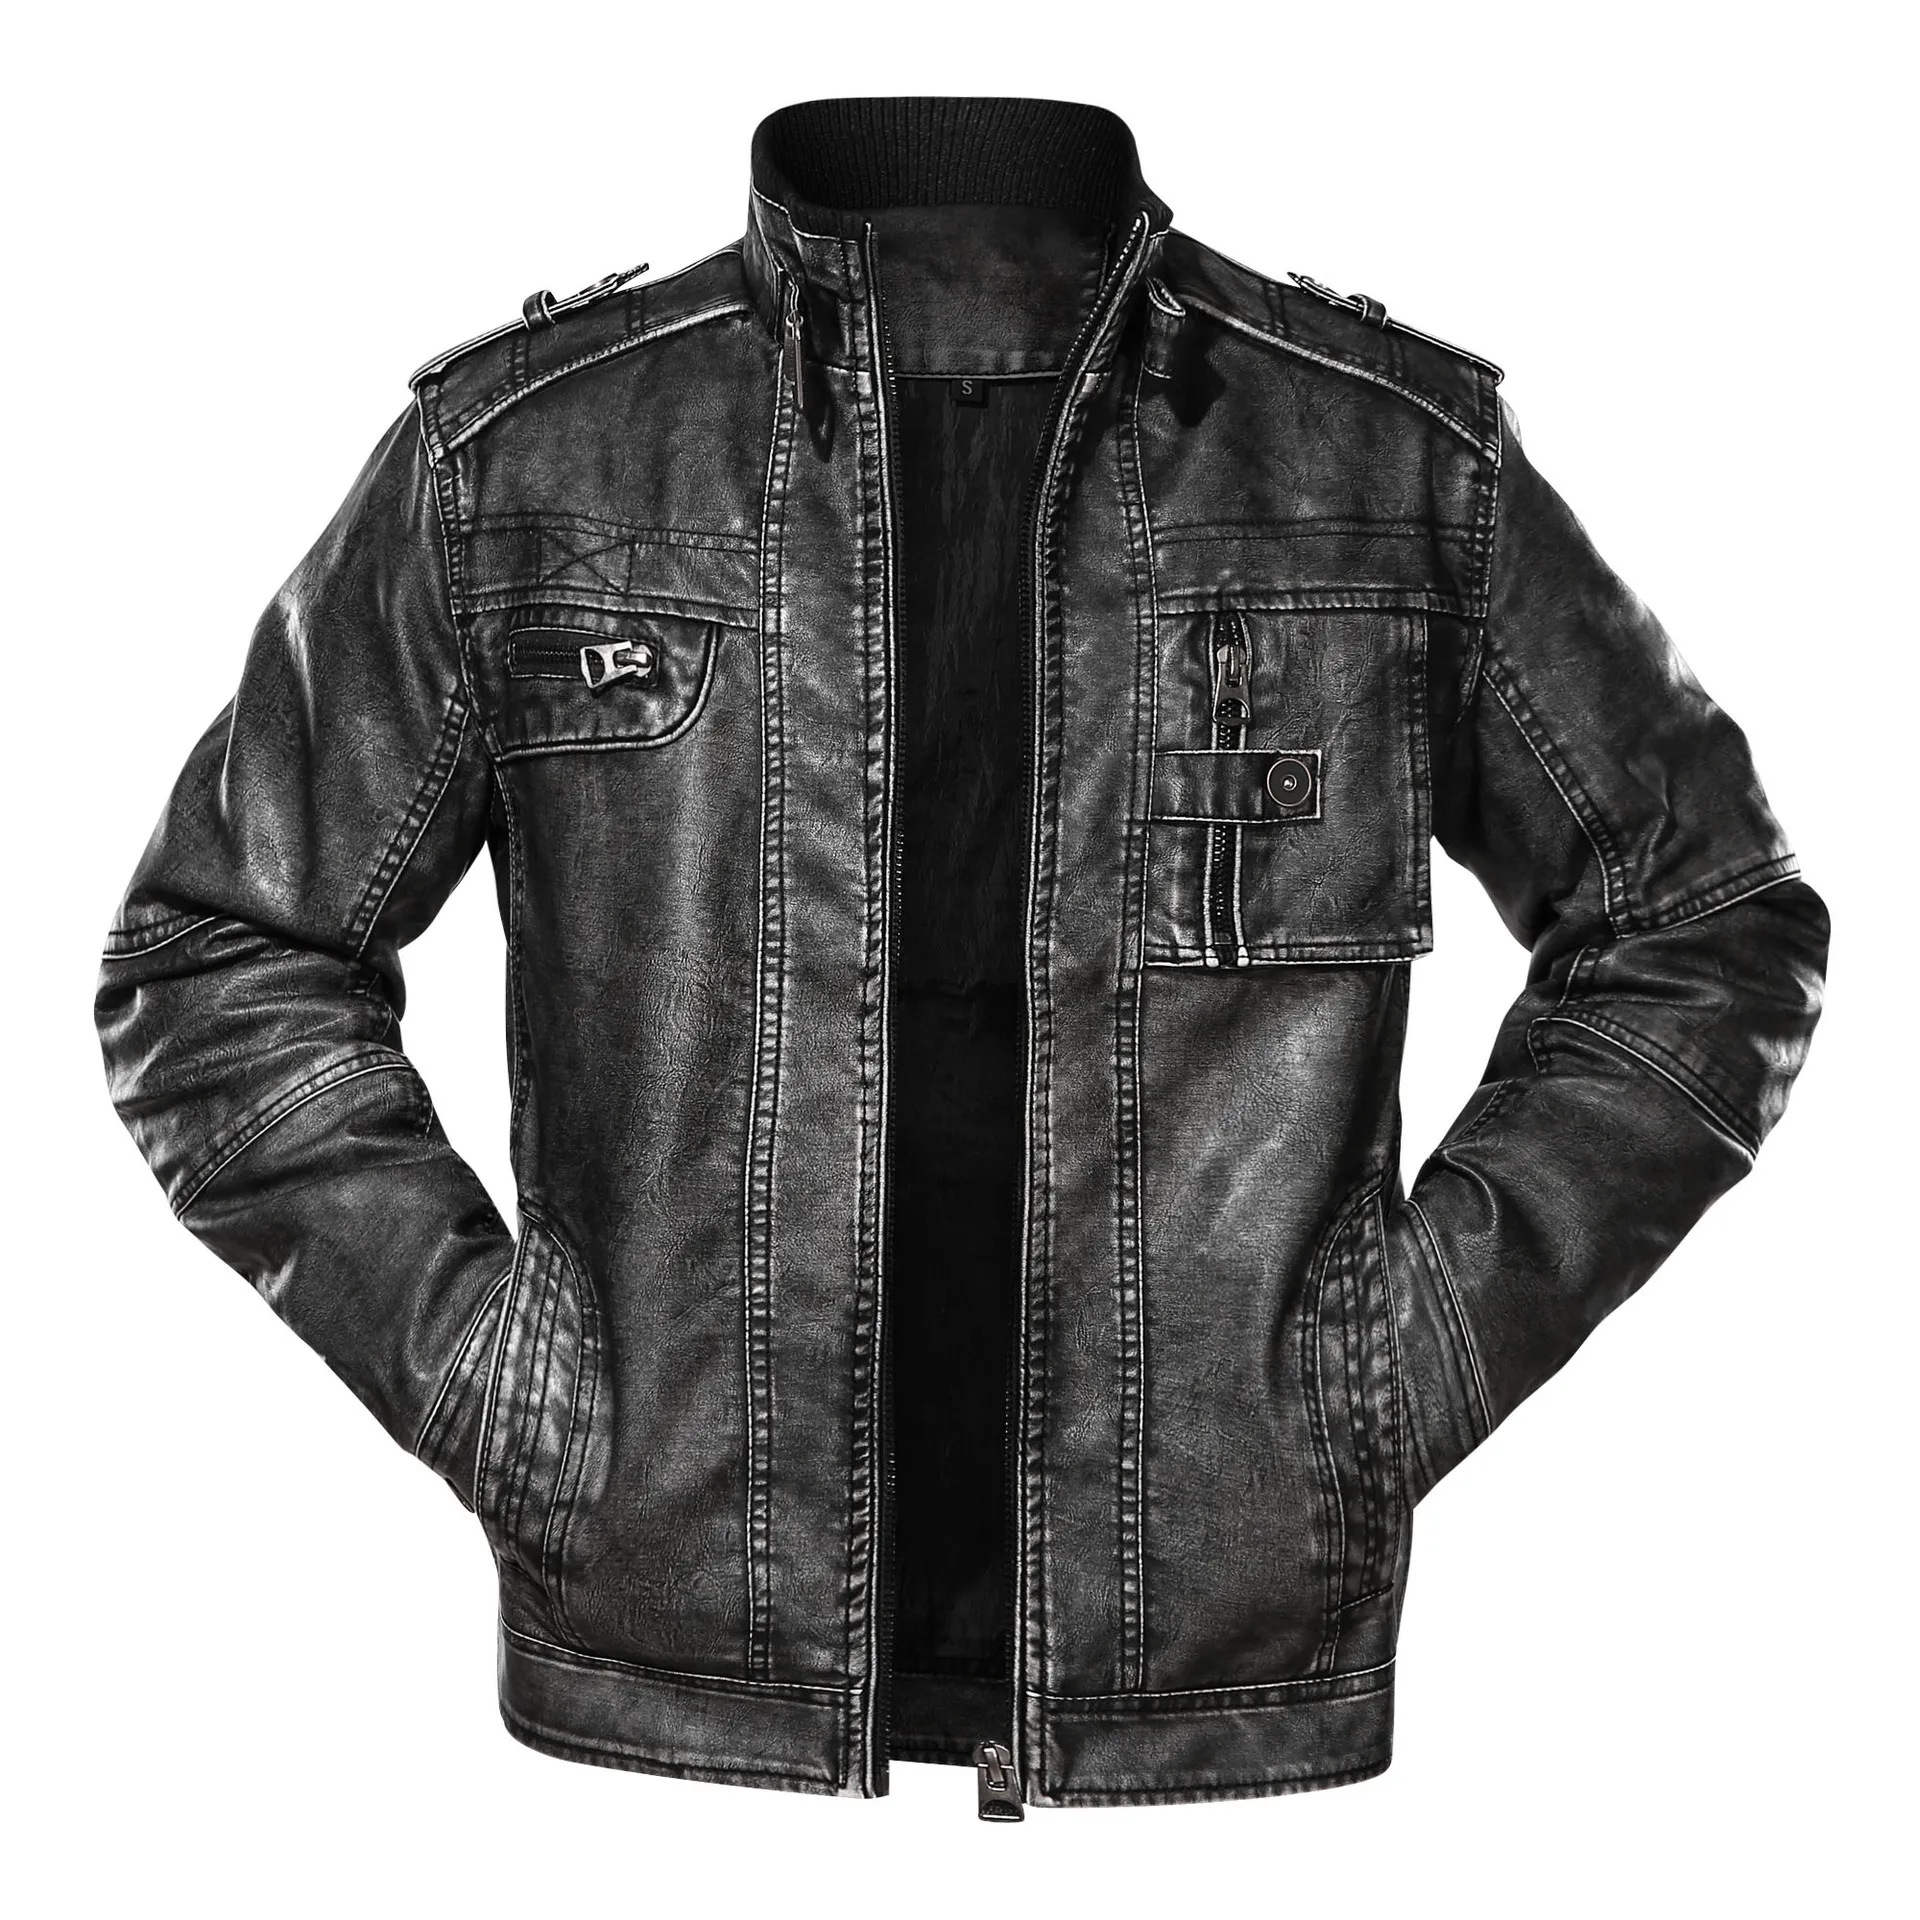 New Men's Leather Jackets Autumn Casual Motorcycle PU Jacket Biker Leather Coats Brand Clothing EU Size